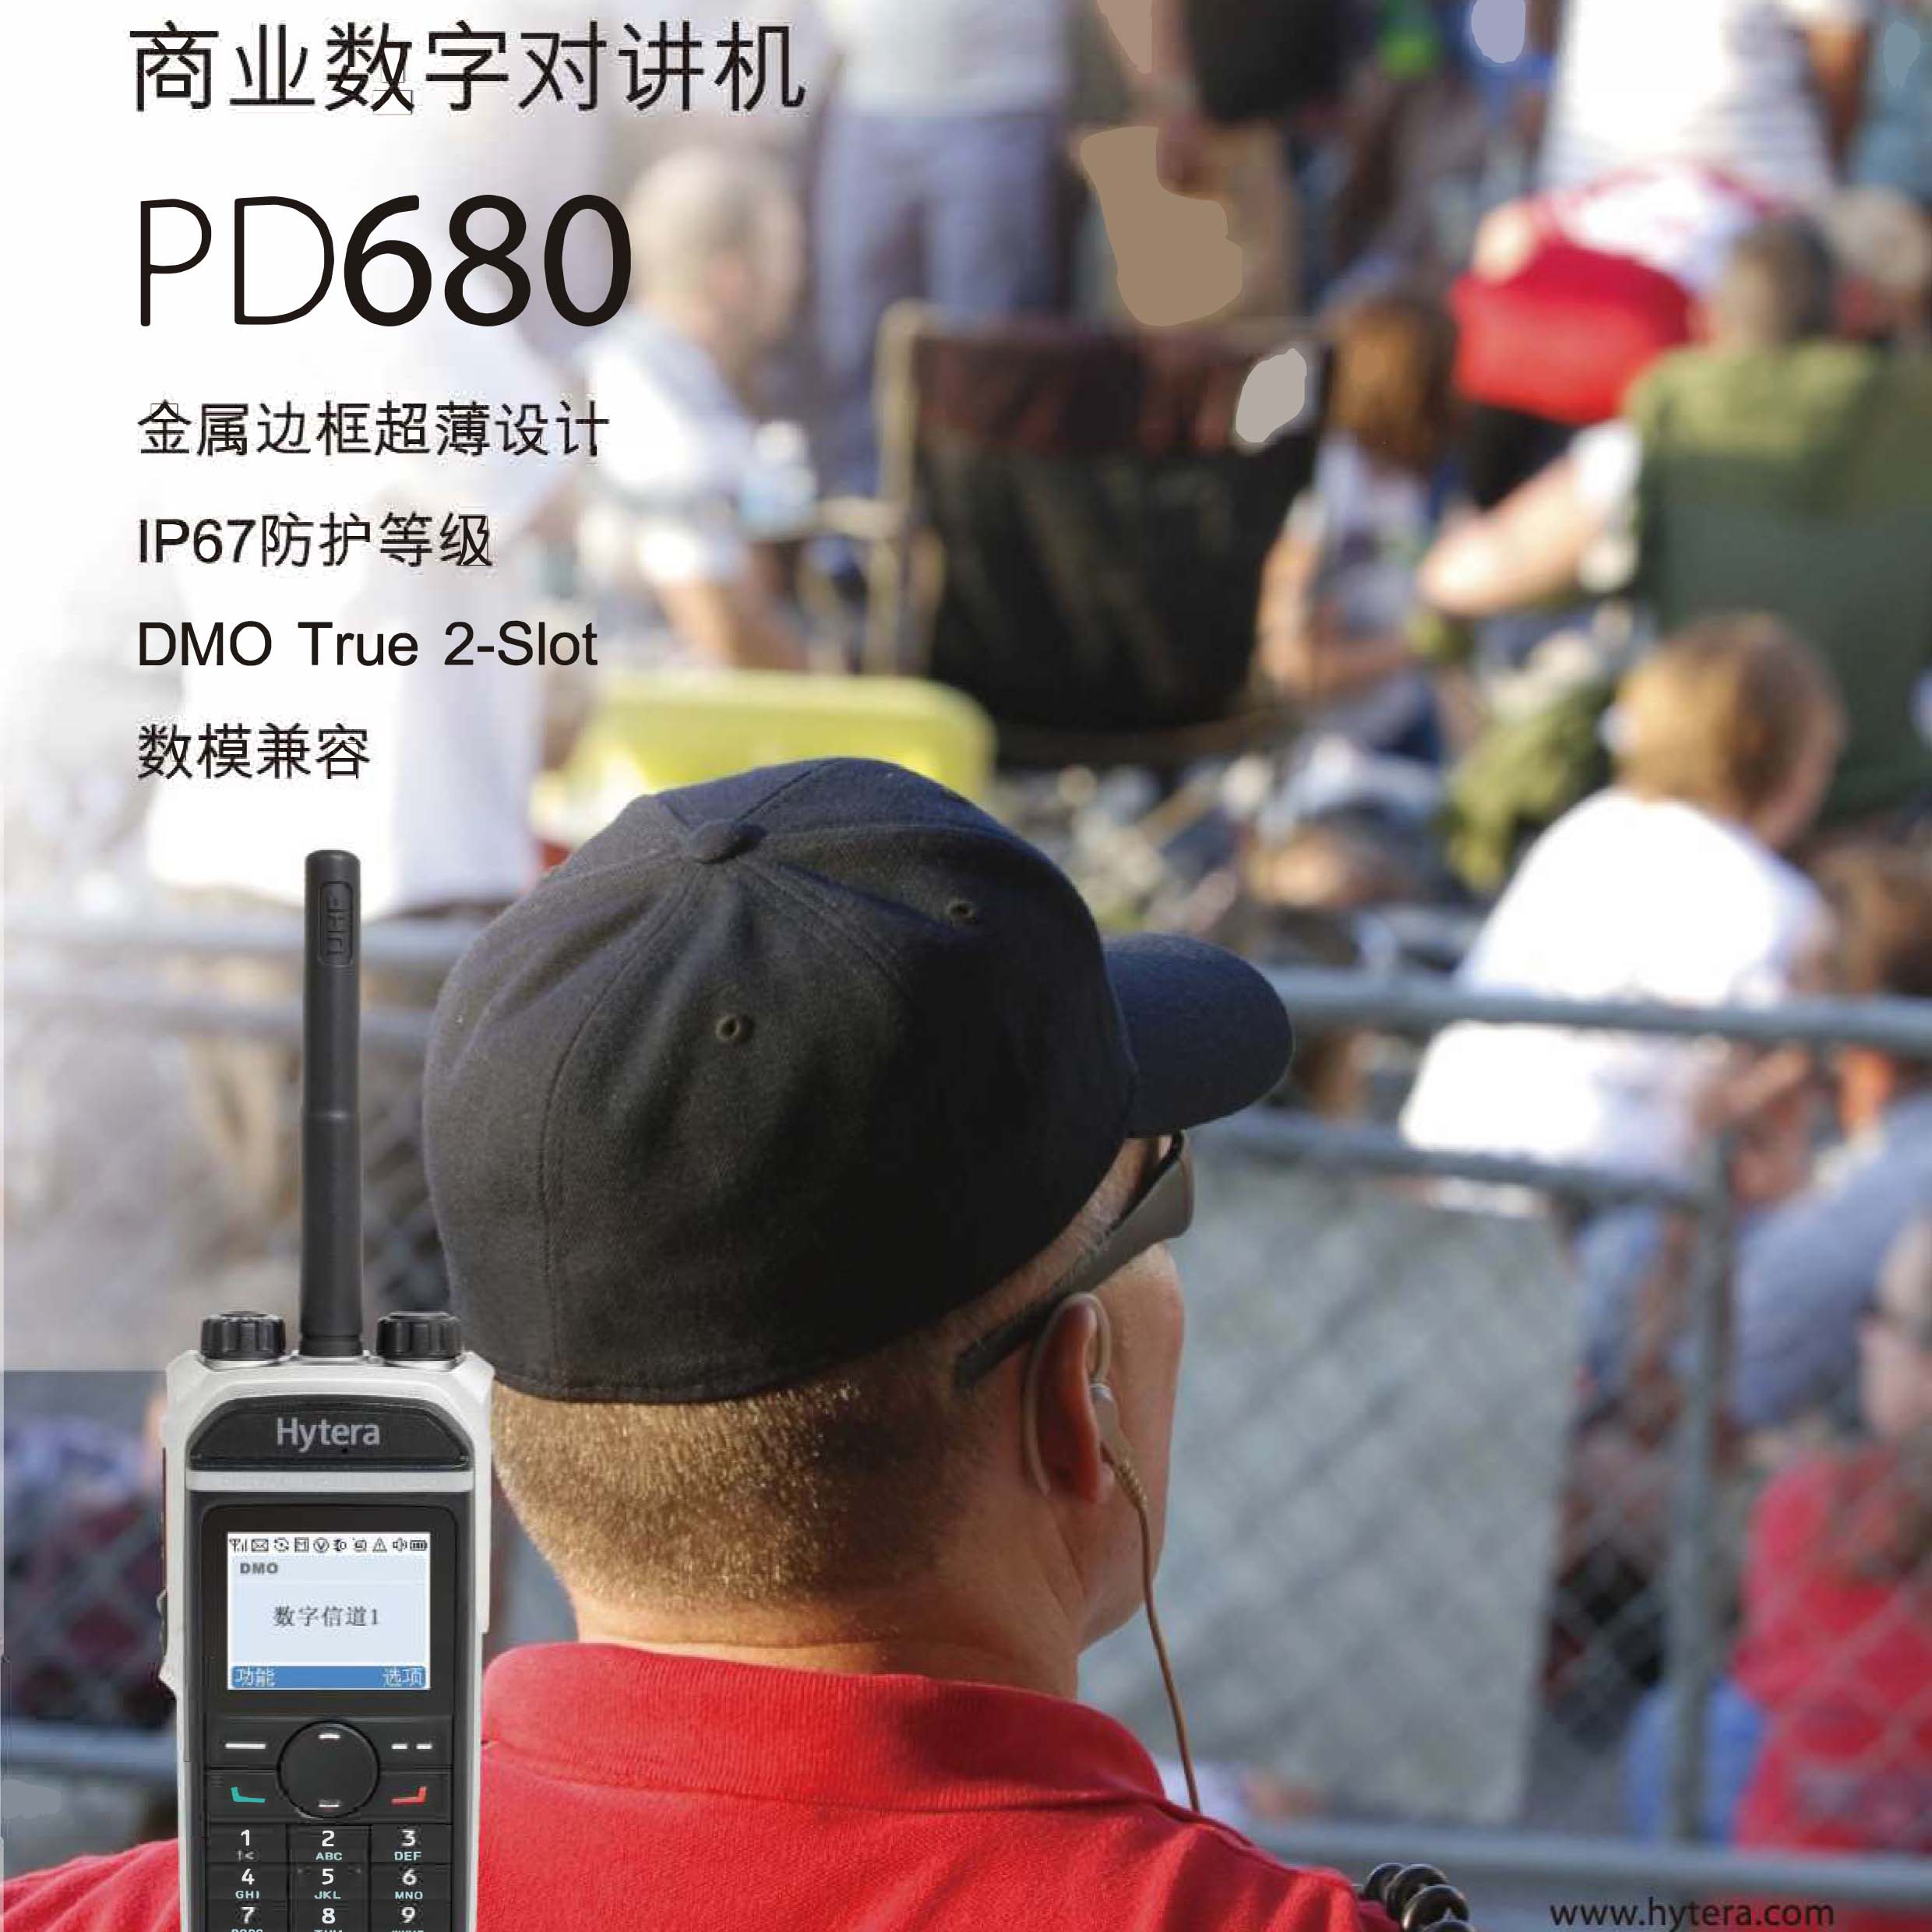 PD680 00